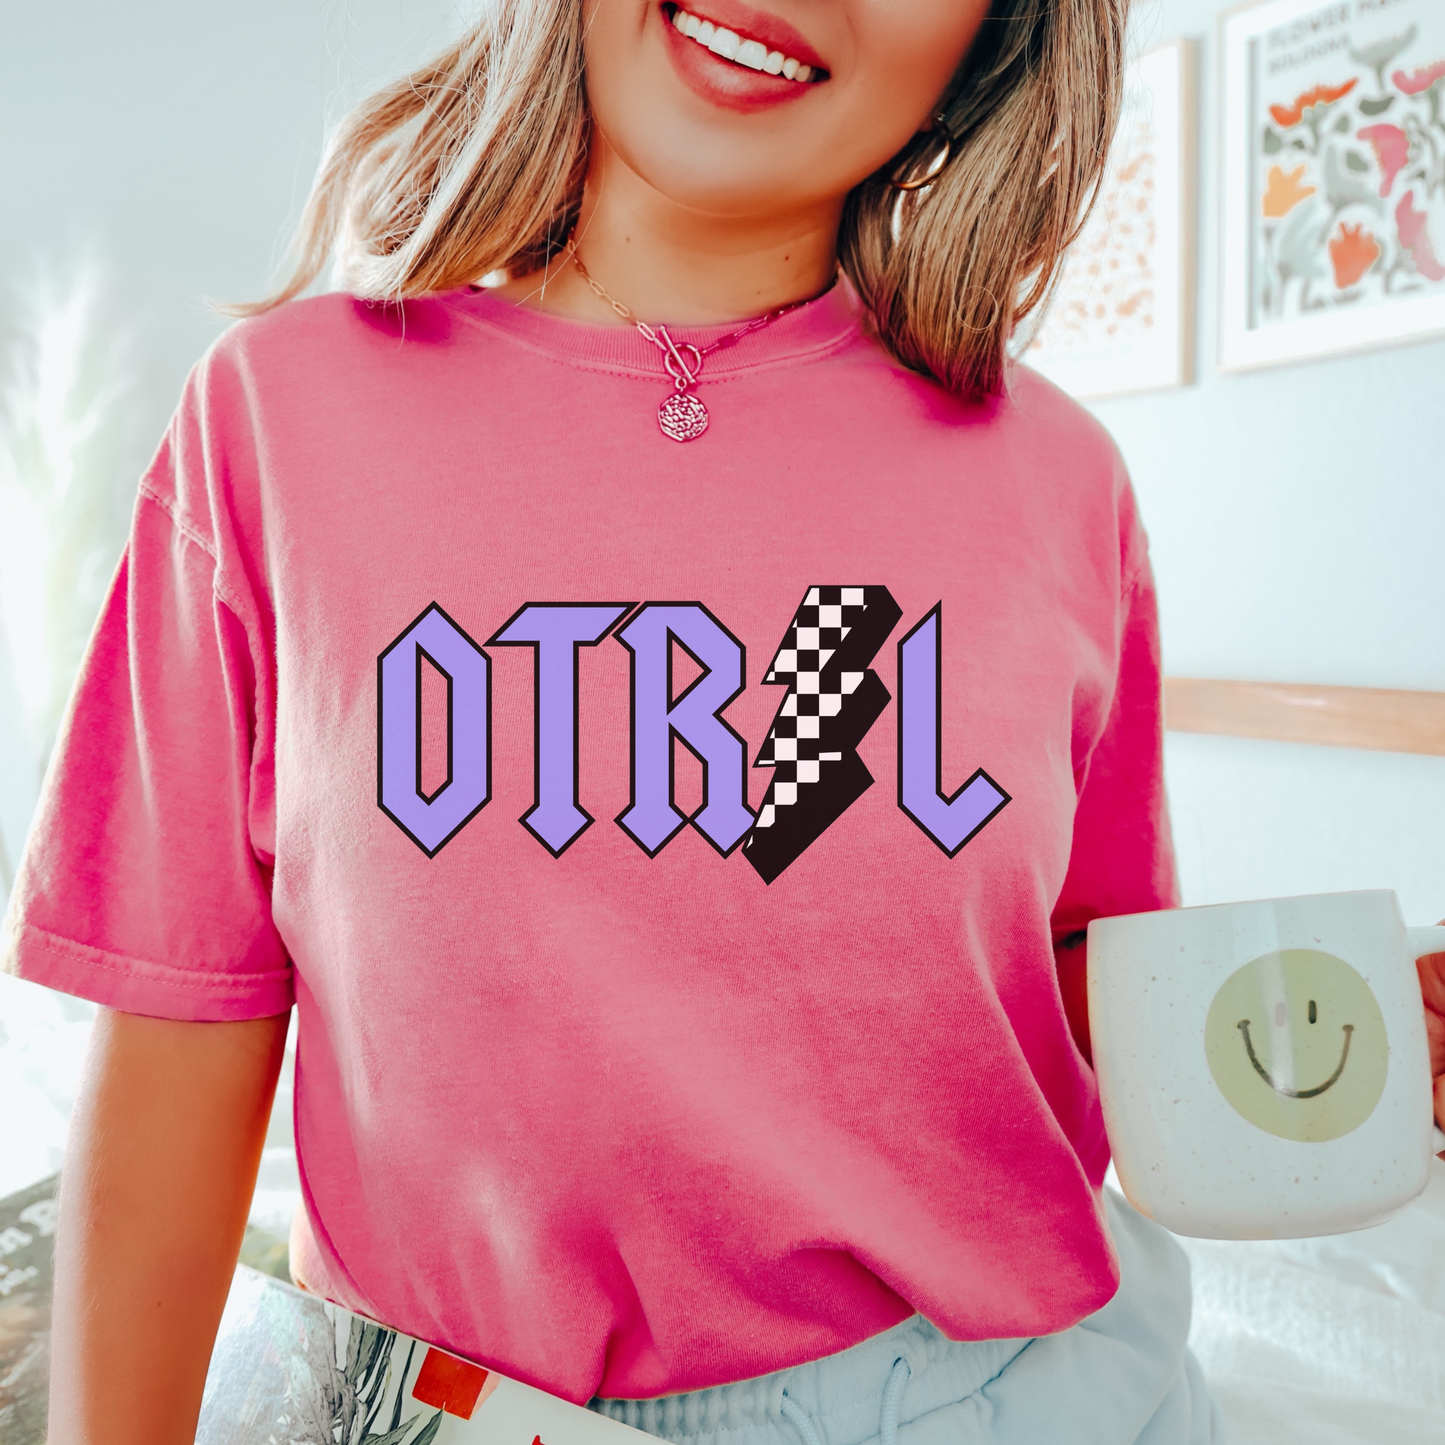 OTR/L Band Inspired Comfort Colors T-Shirt